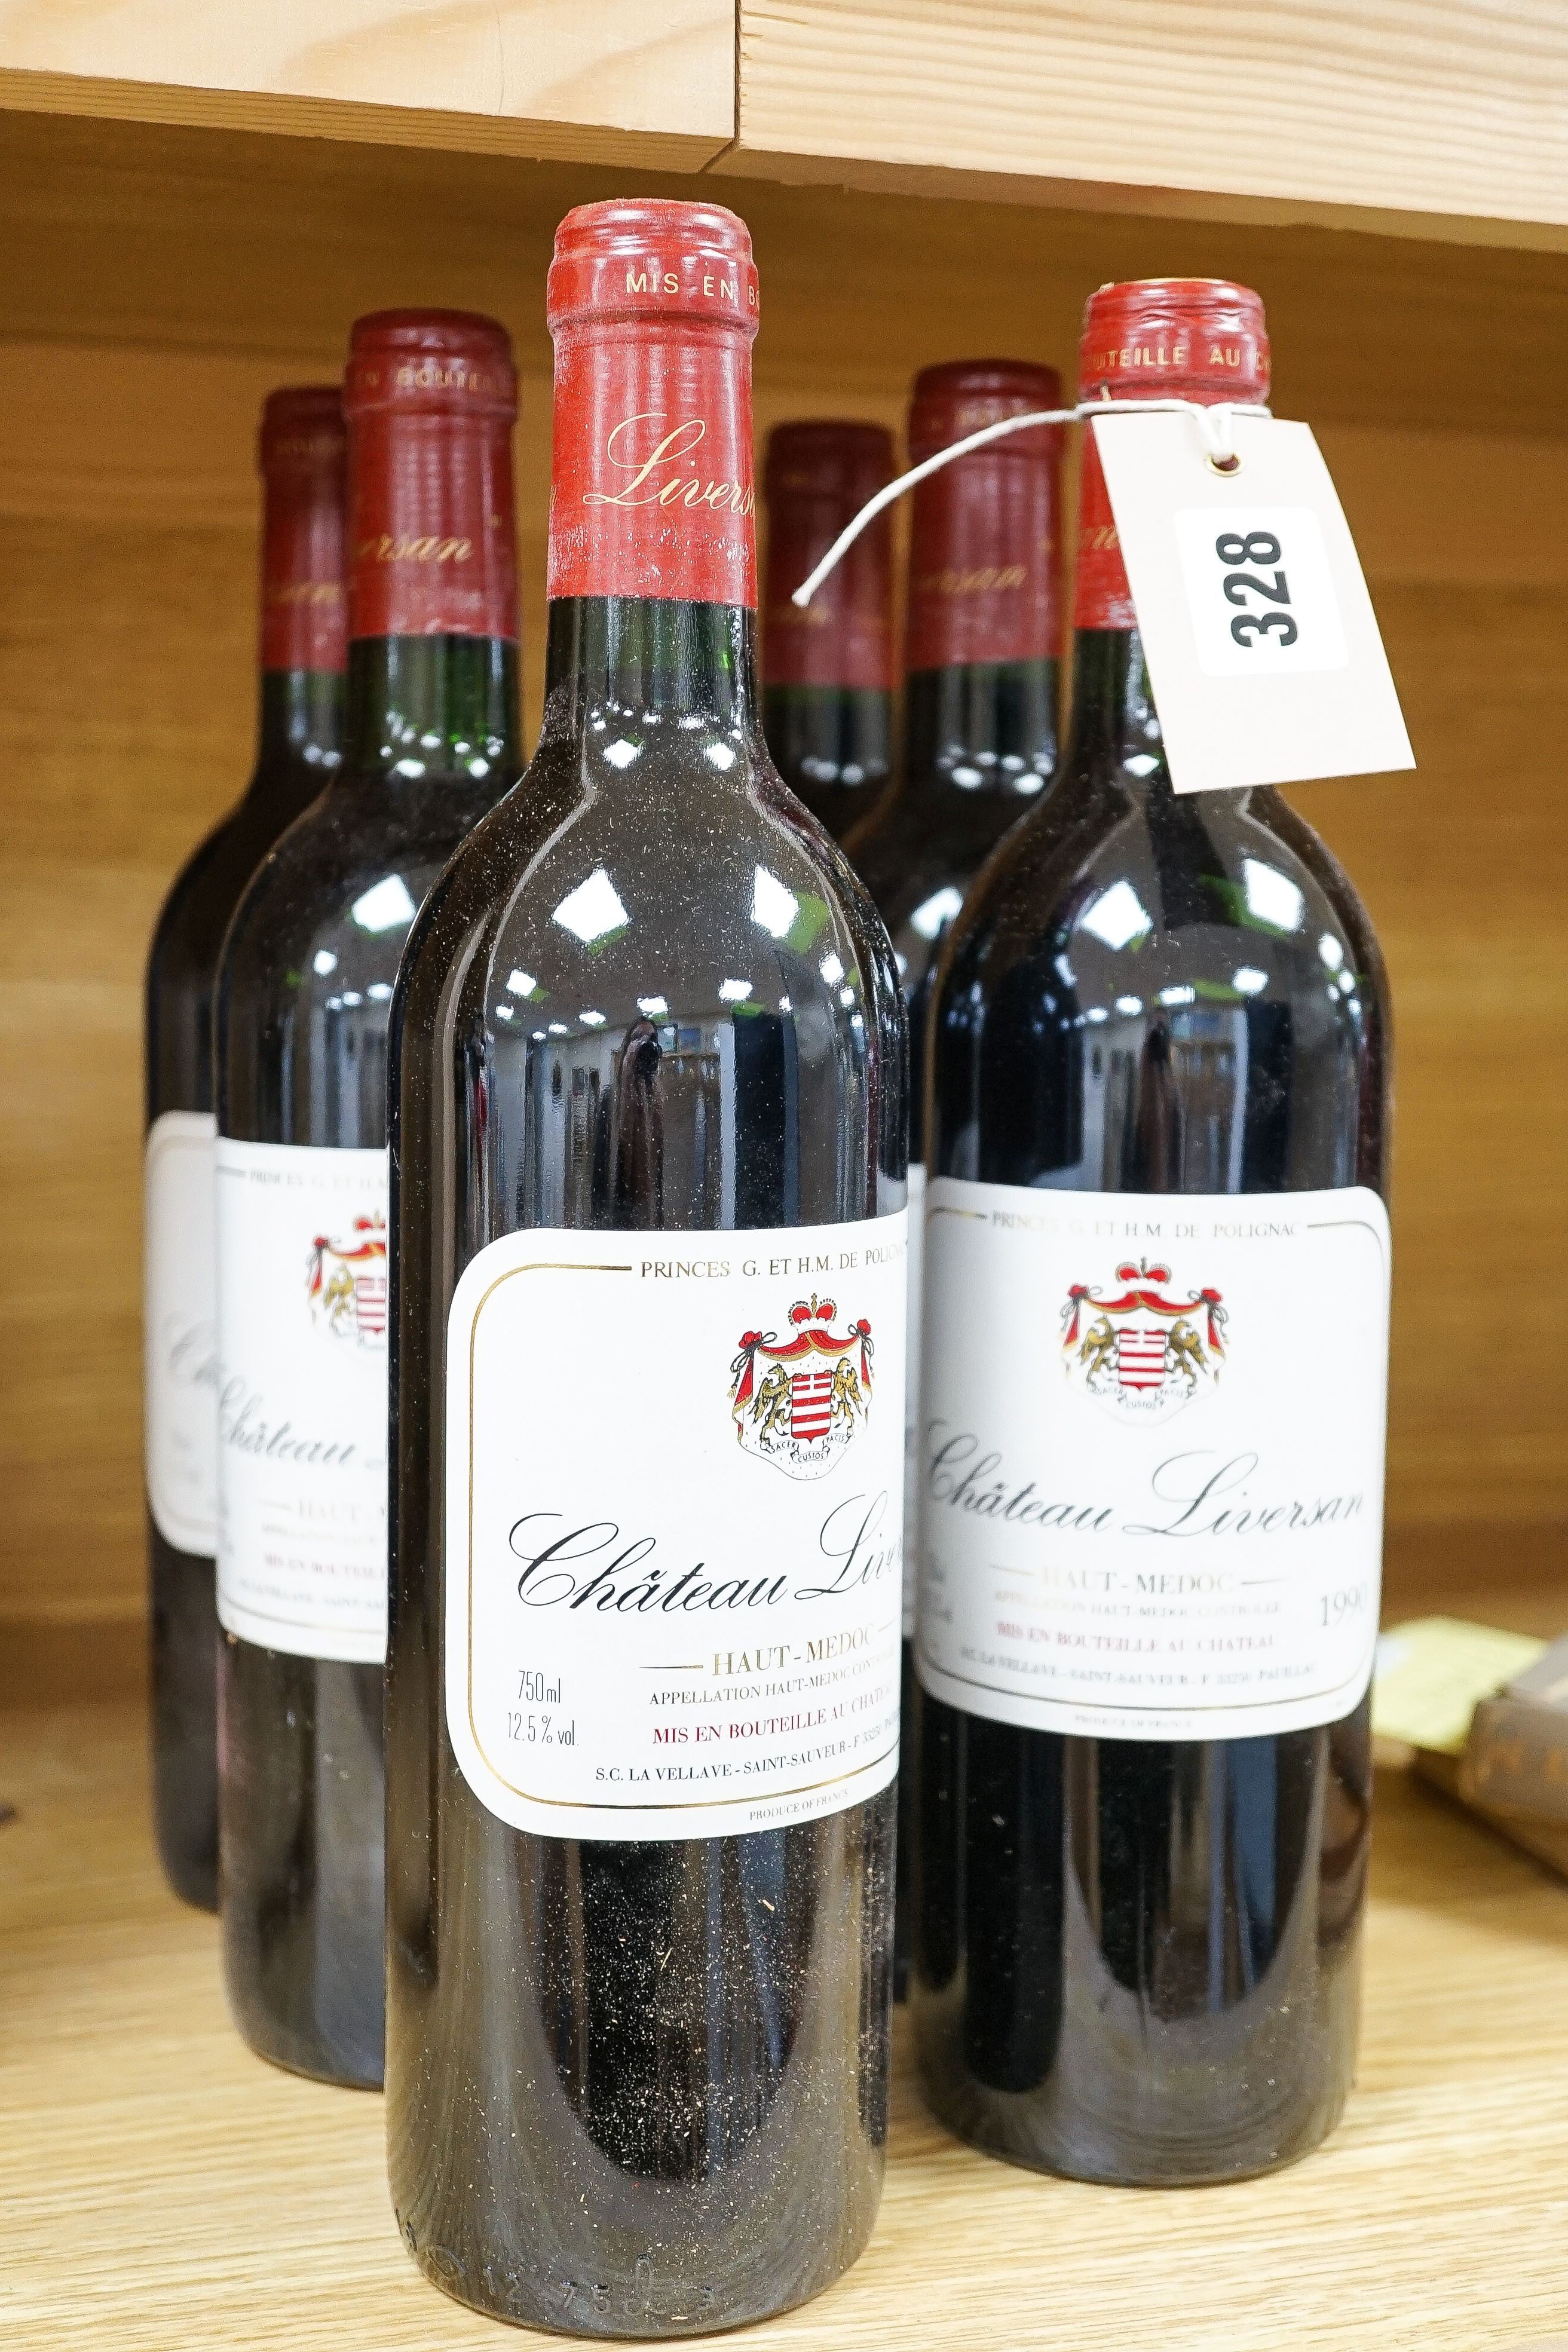 Six bottles of Chateau Liversan - Haut Medoc, 1990, 75cl.